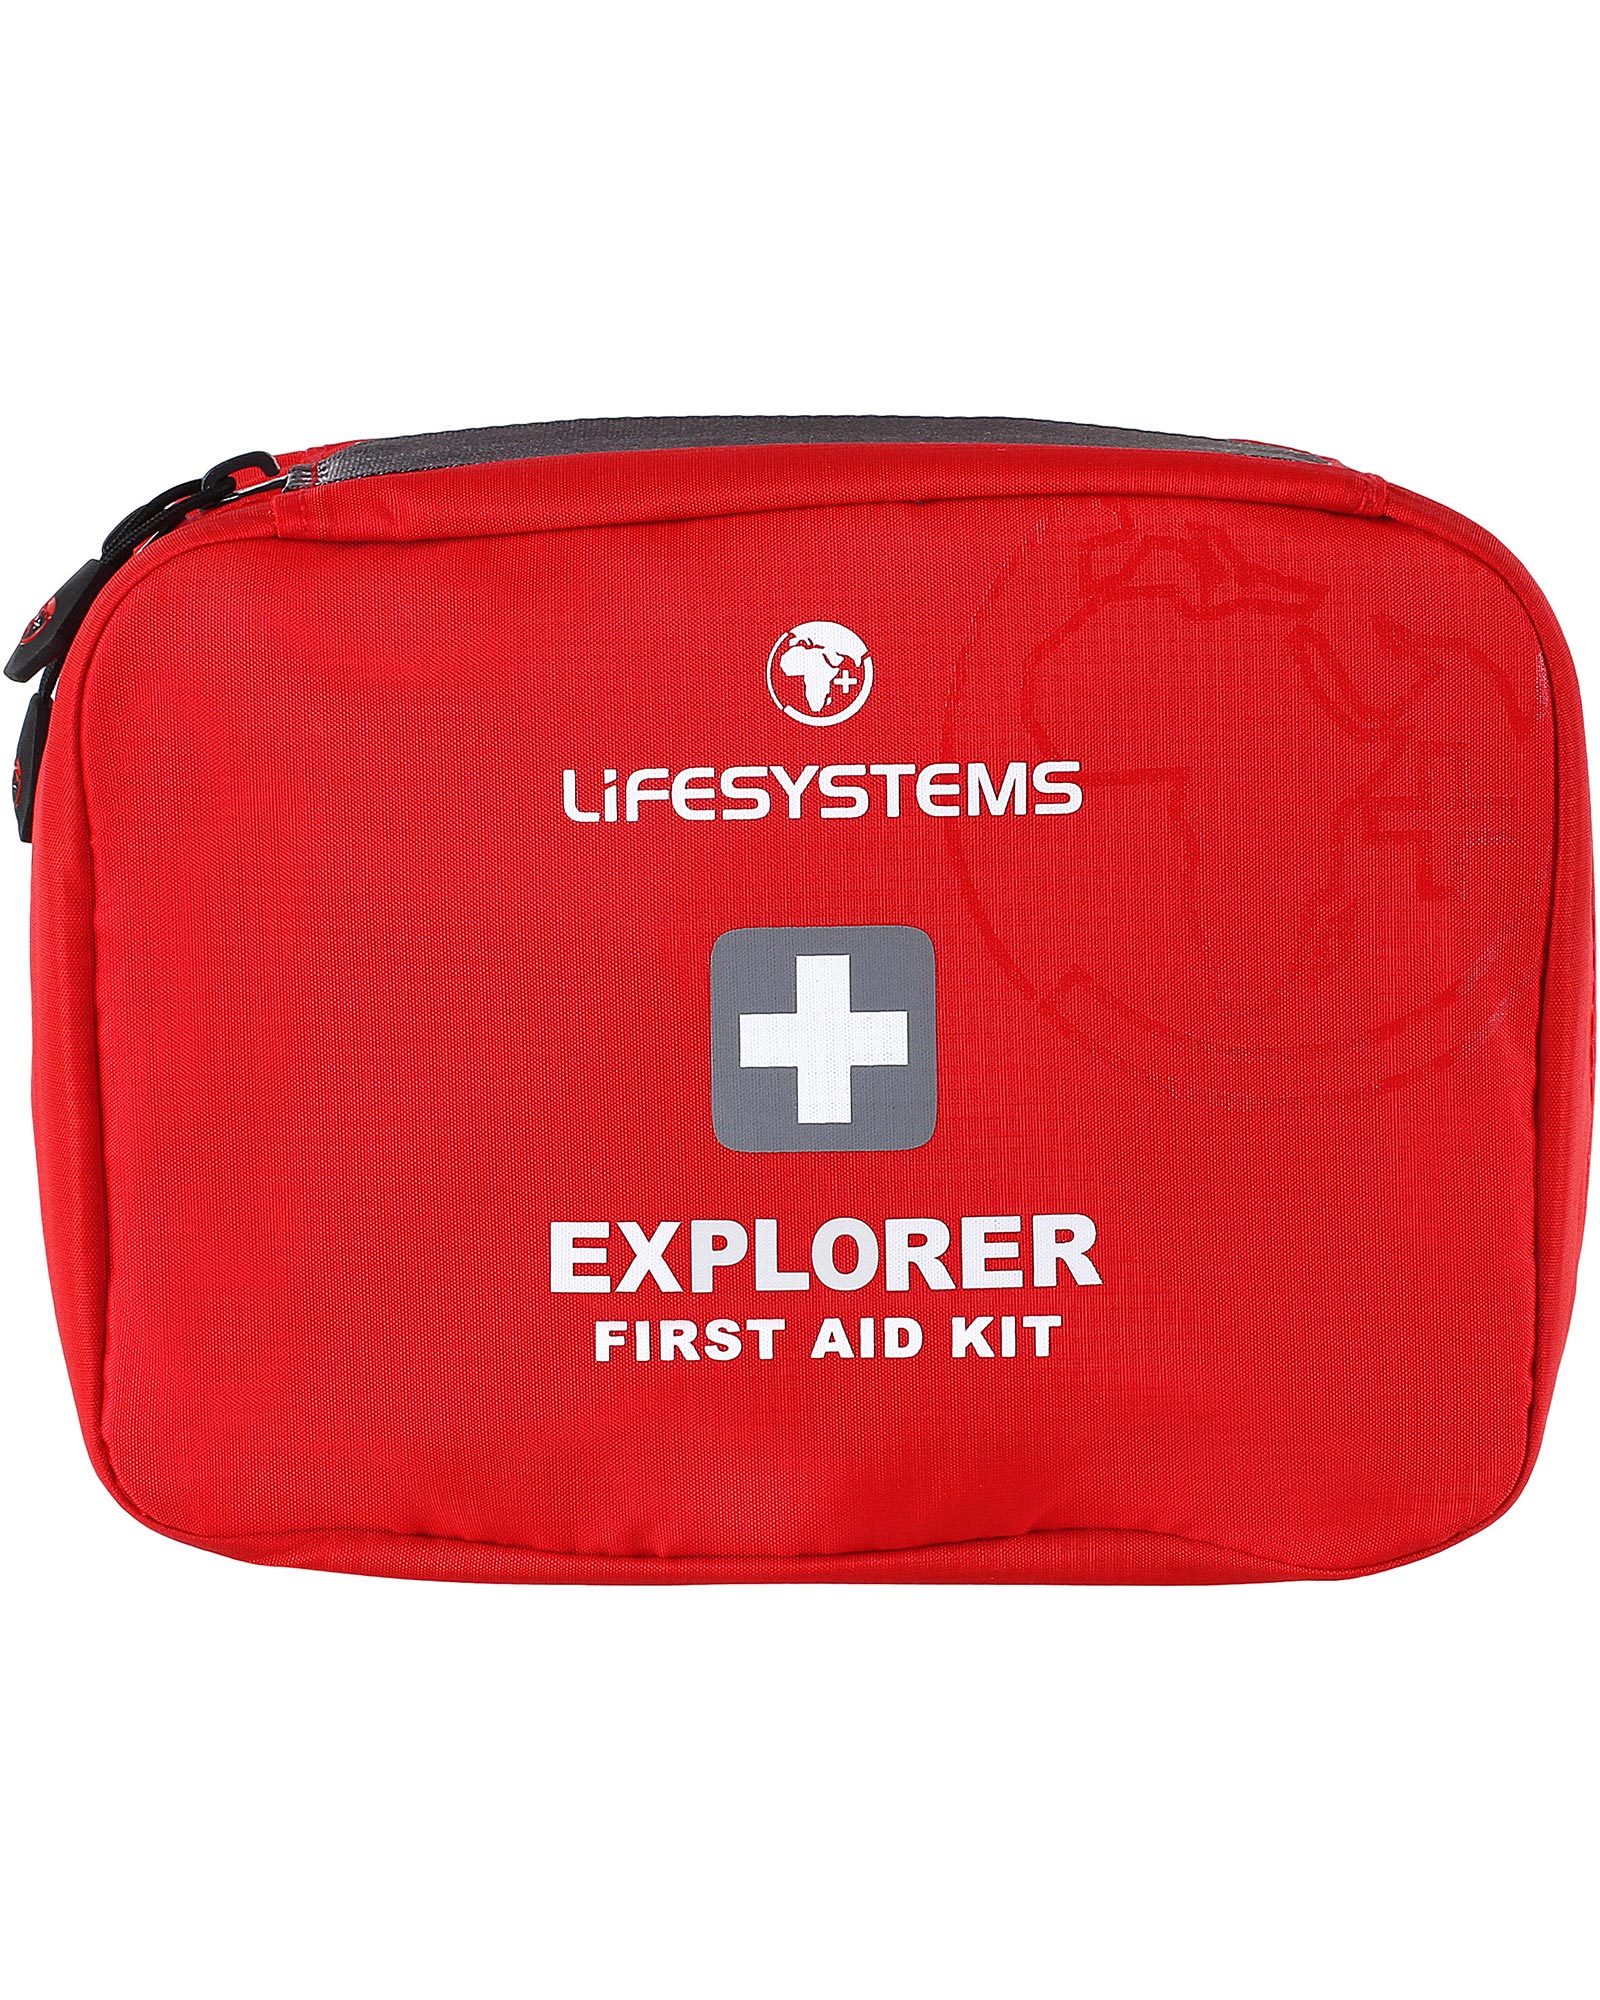 Lifesystems Explorer First Aid Kit 0